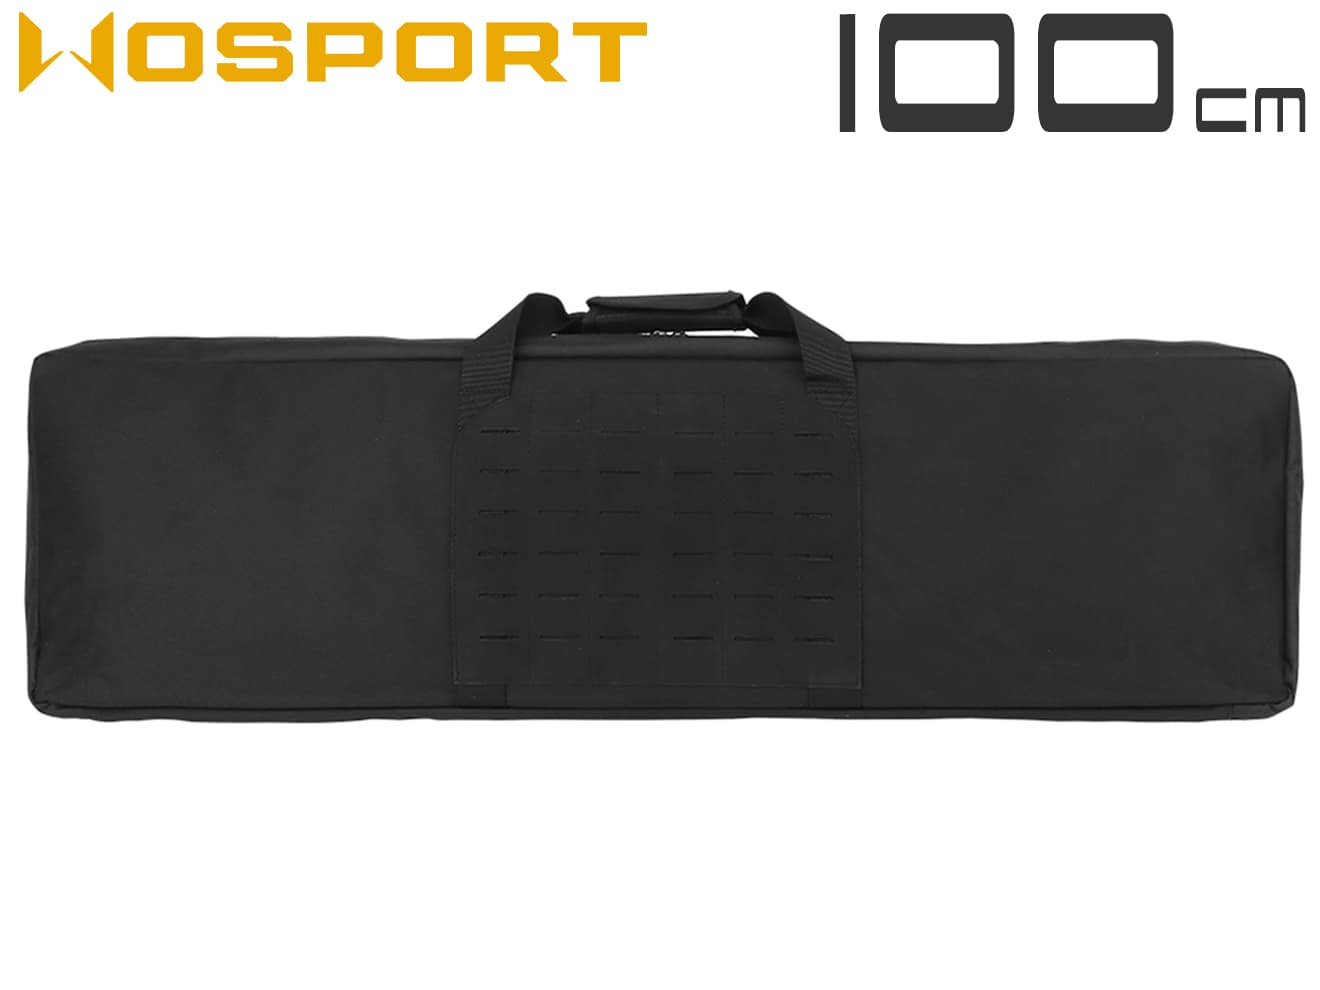 WoSporT ソフト ガンバッグ ライフル 100 レーザーカットMOLLE(100cm*28cm*7cm) ミリタリーベース –  ミリタリーベース MILITARY BASE